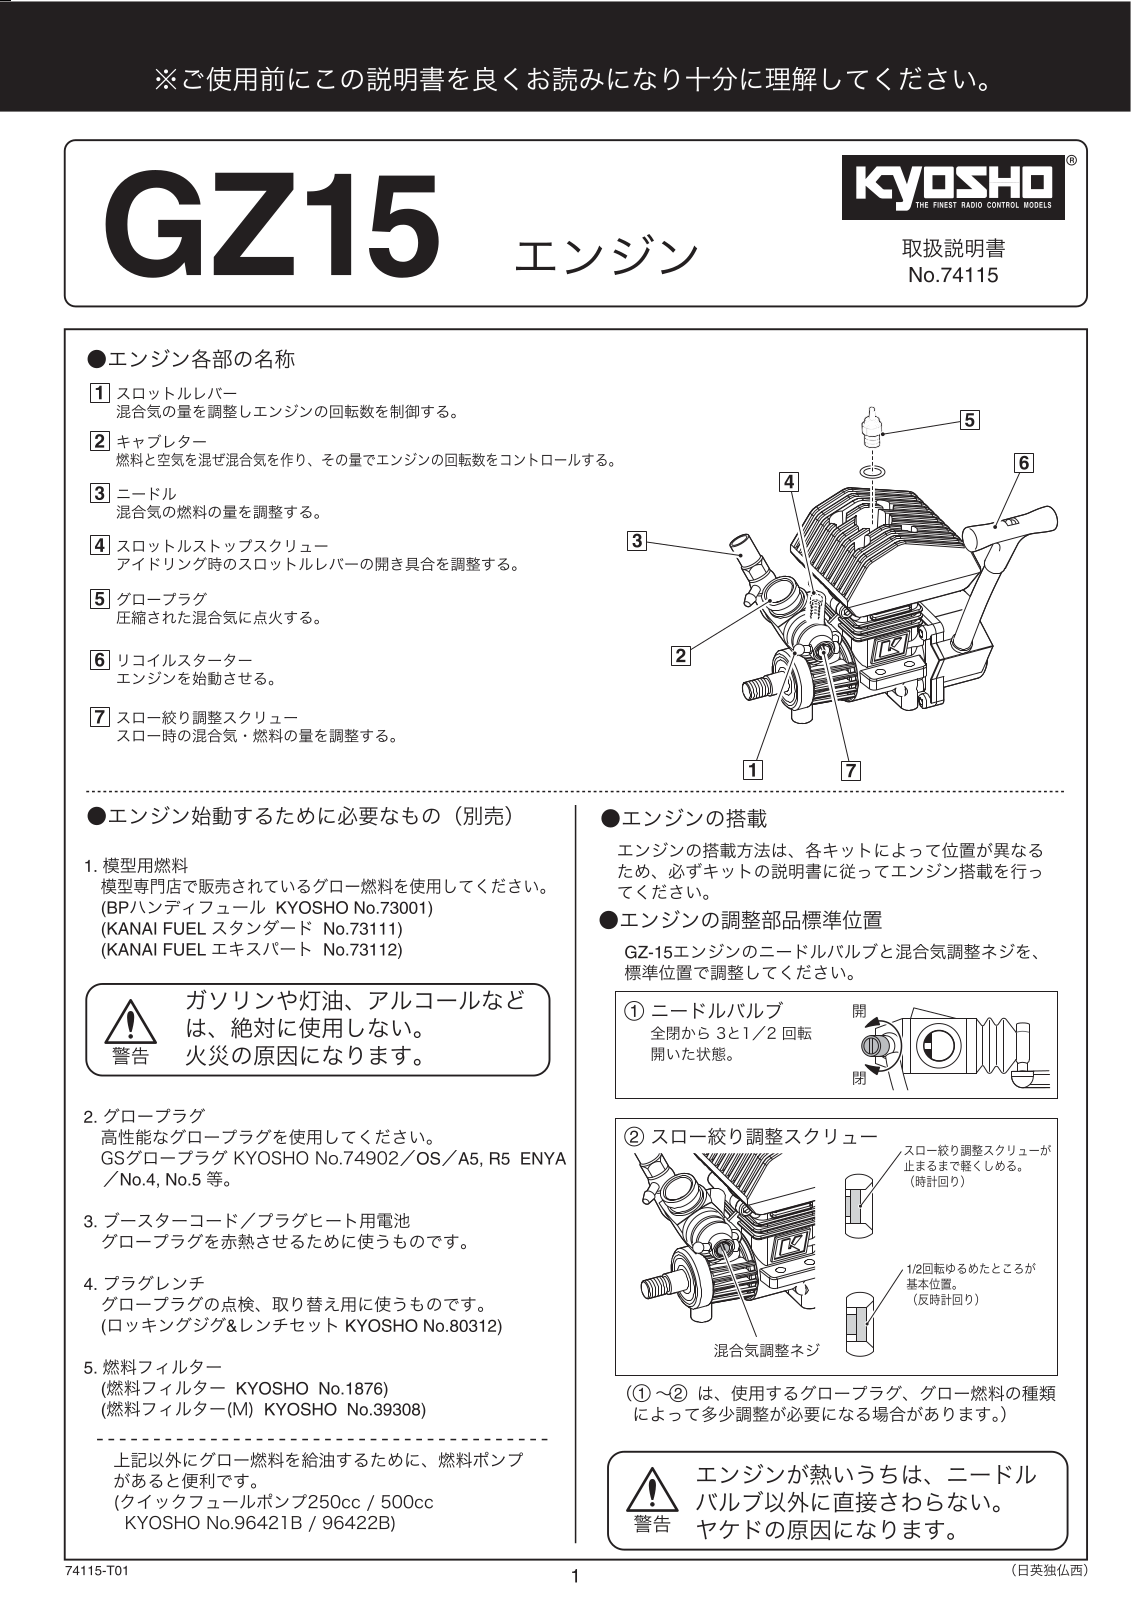 Kyosho GZ15 Manual